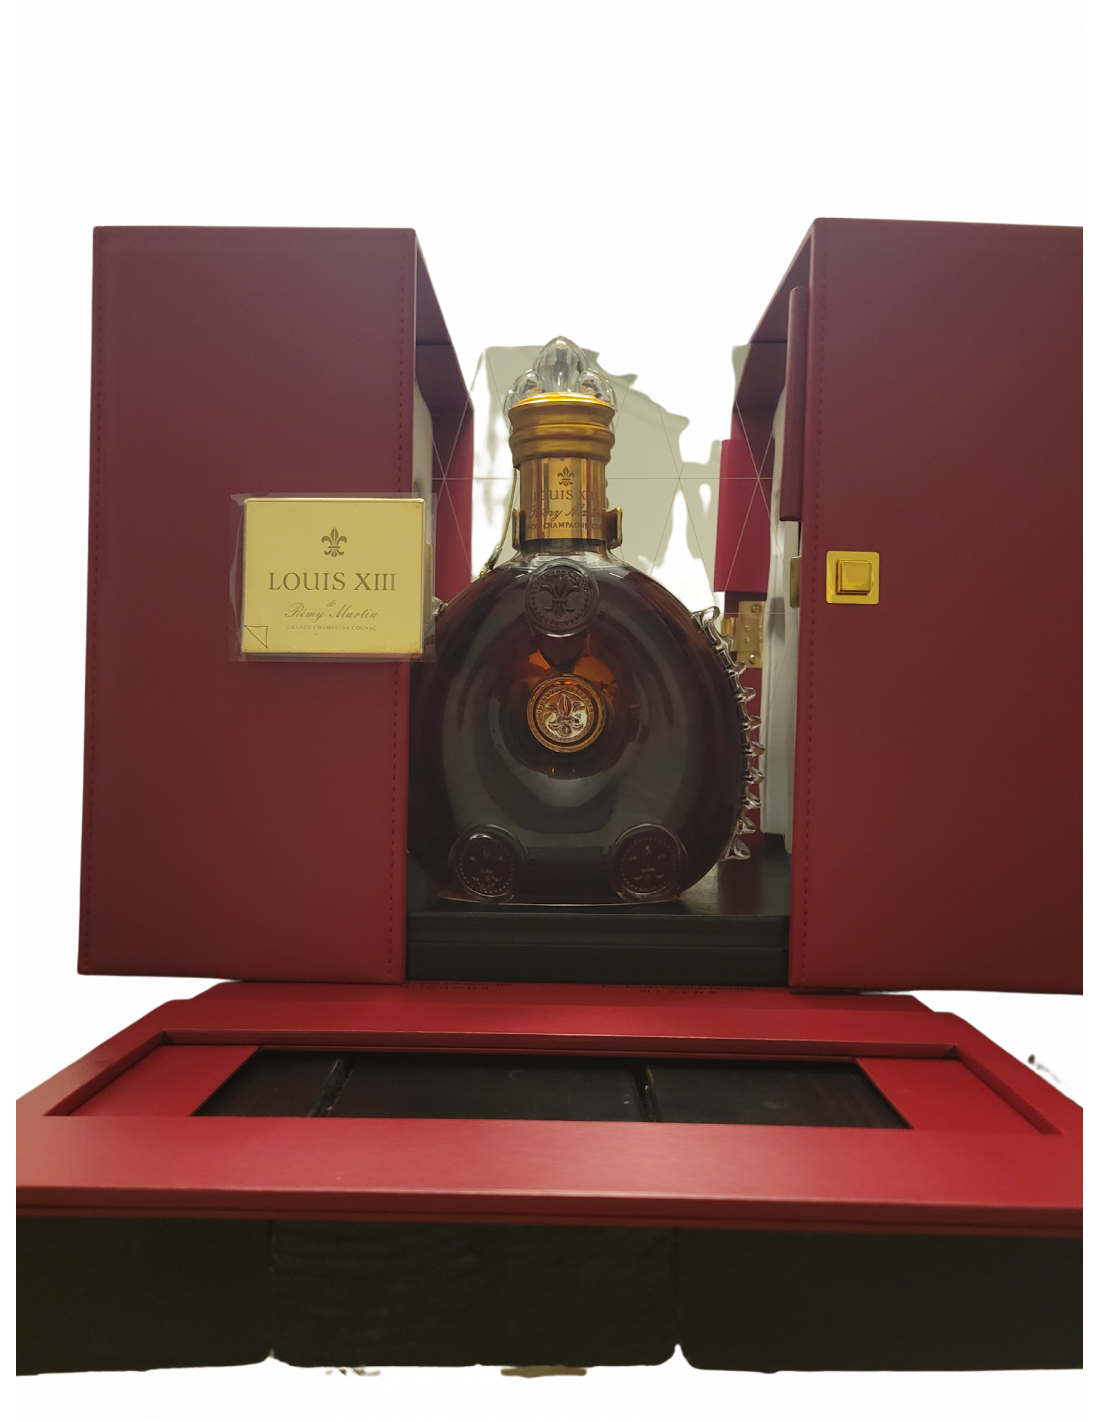 Remy Martin Louis XIII Cognac - Lot 12384 - Buy/Sell Cognac Online